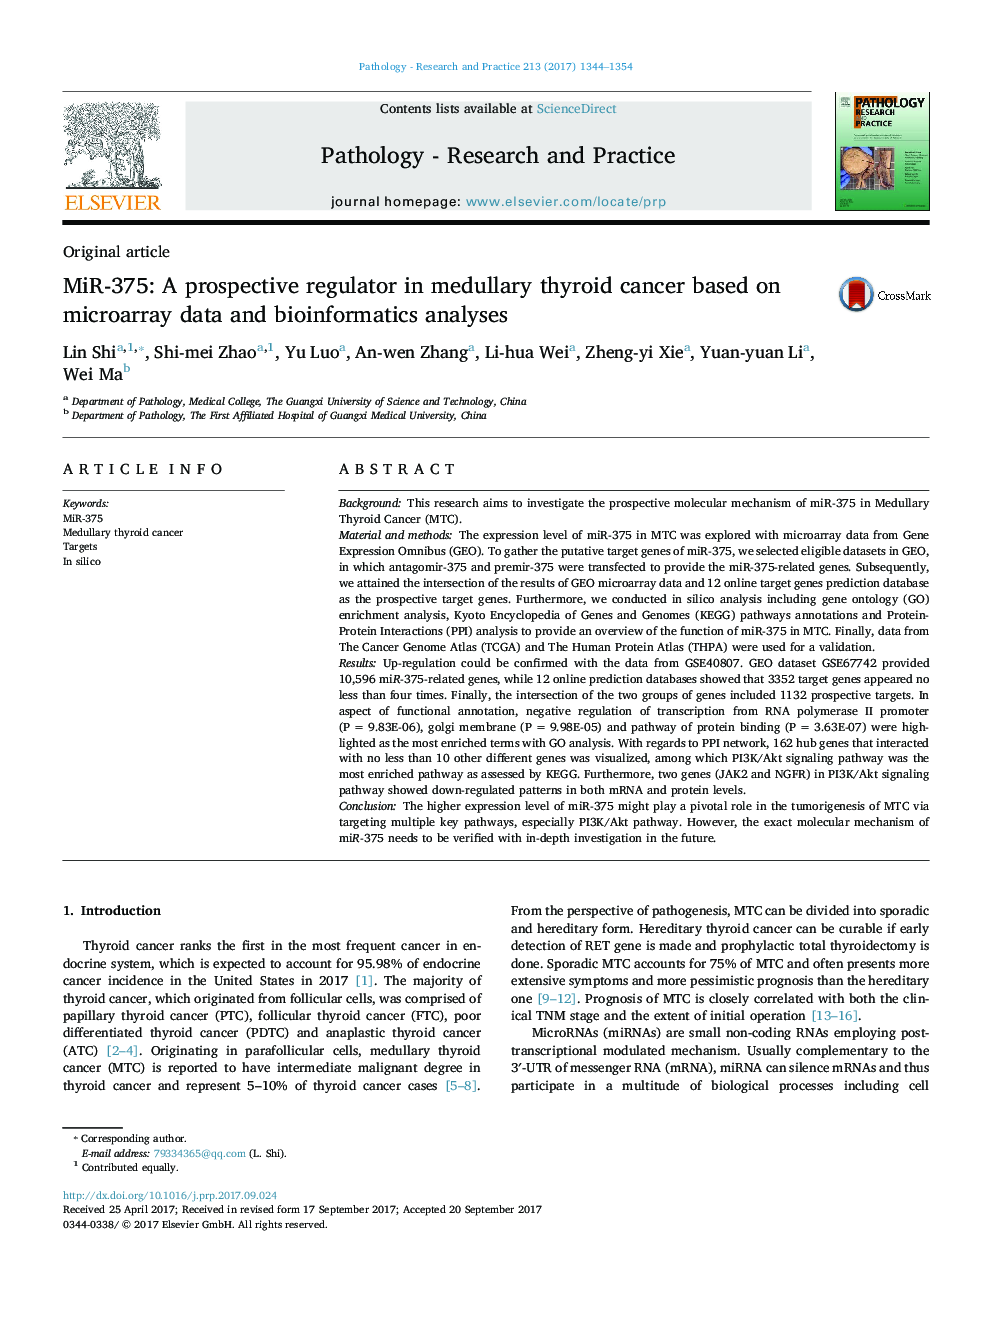 Original articleMiR-375: A prospective regulator in medullary thyroid cancer based on microarray data and bioinformatics analyses